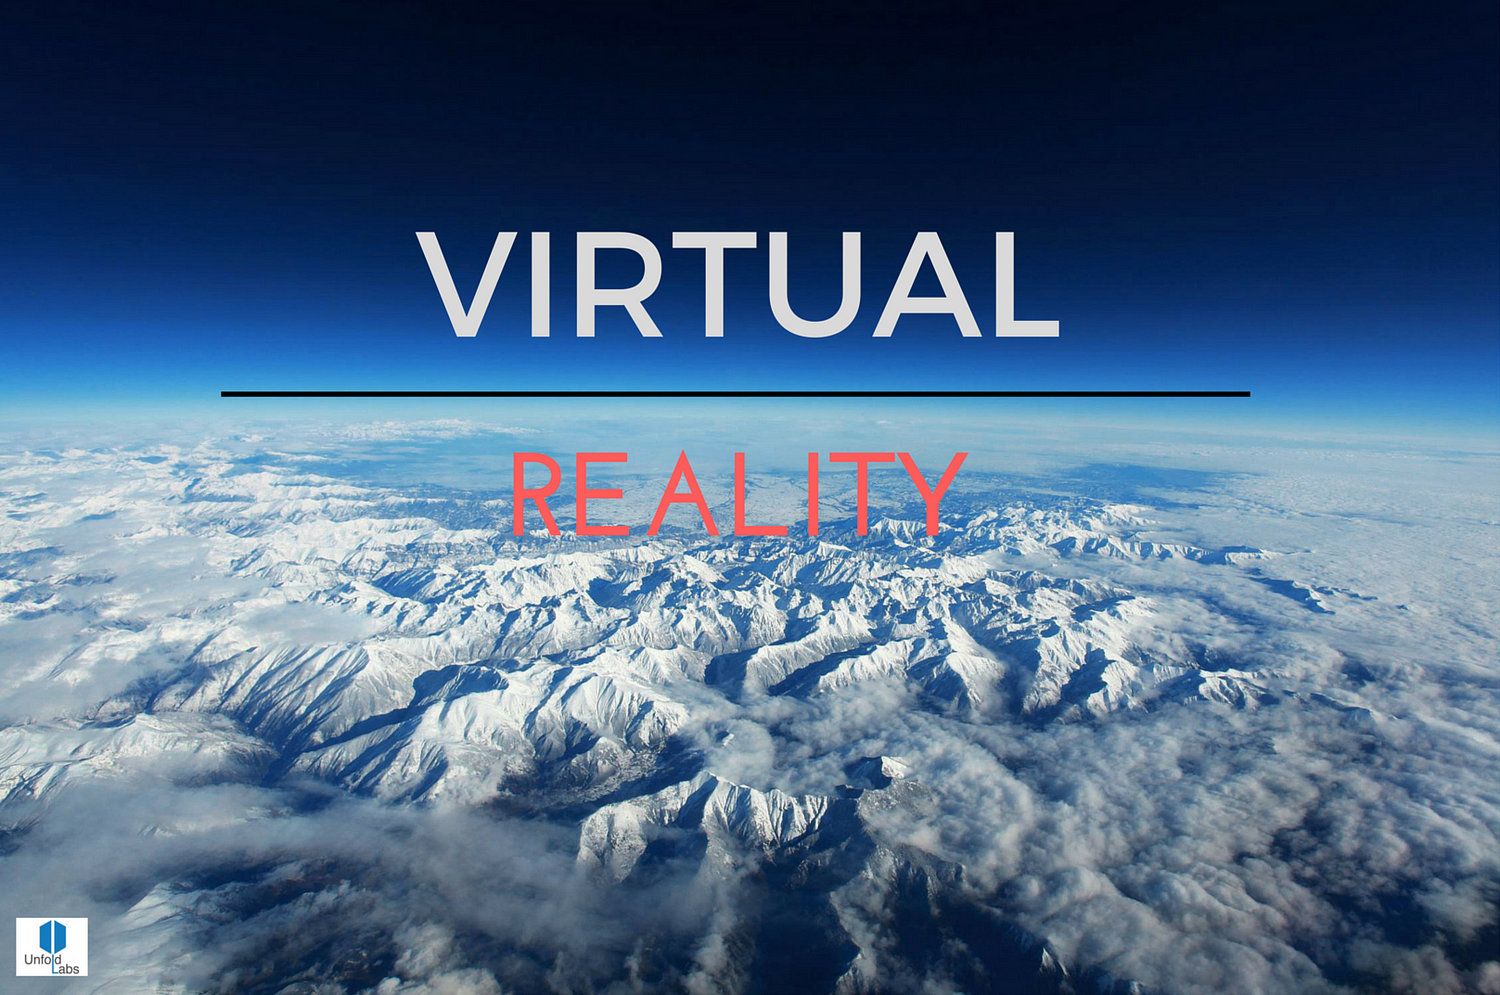 Virtual Reality Device Market — Making Heads Turn